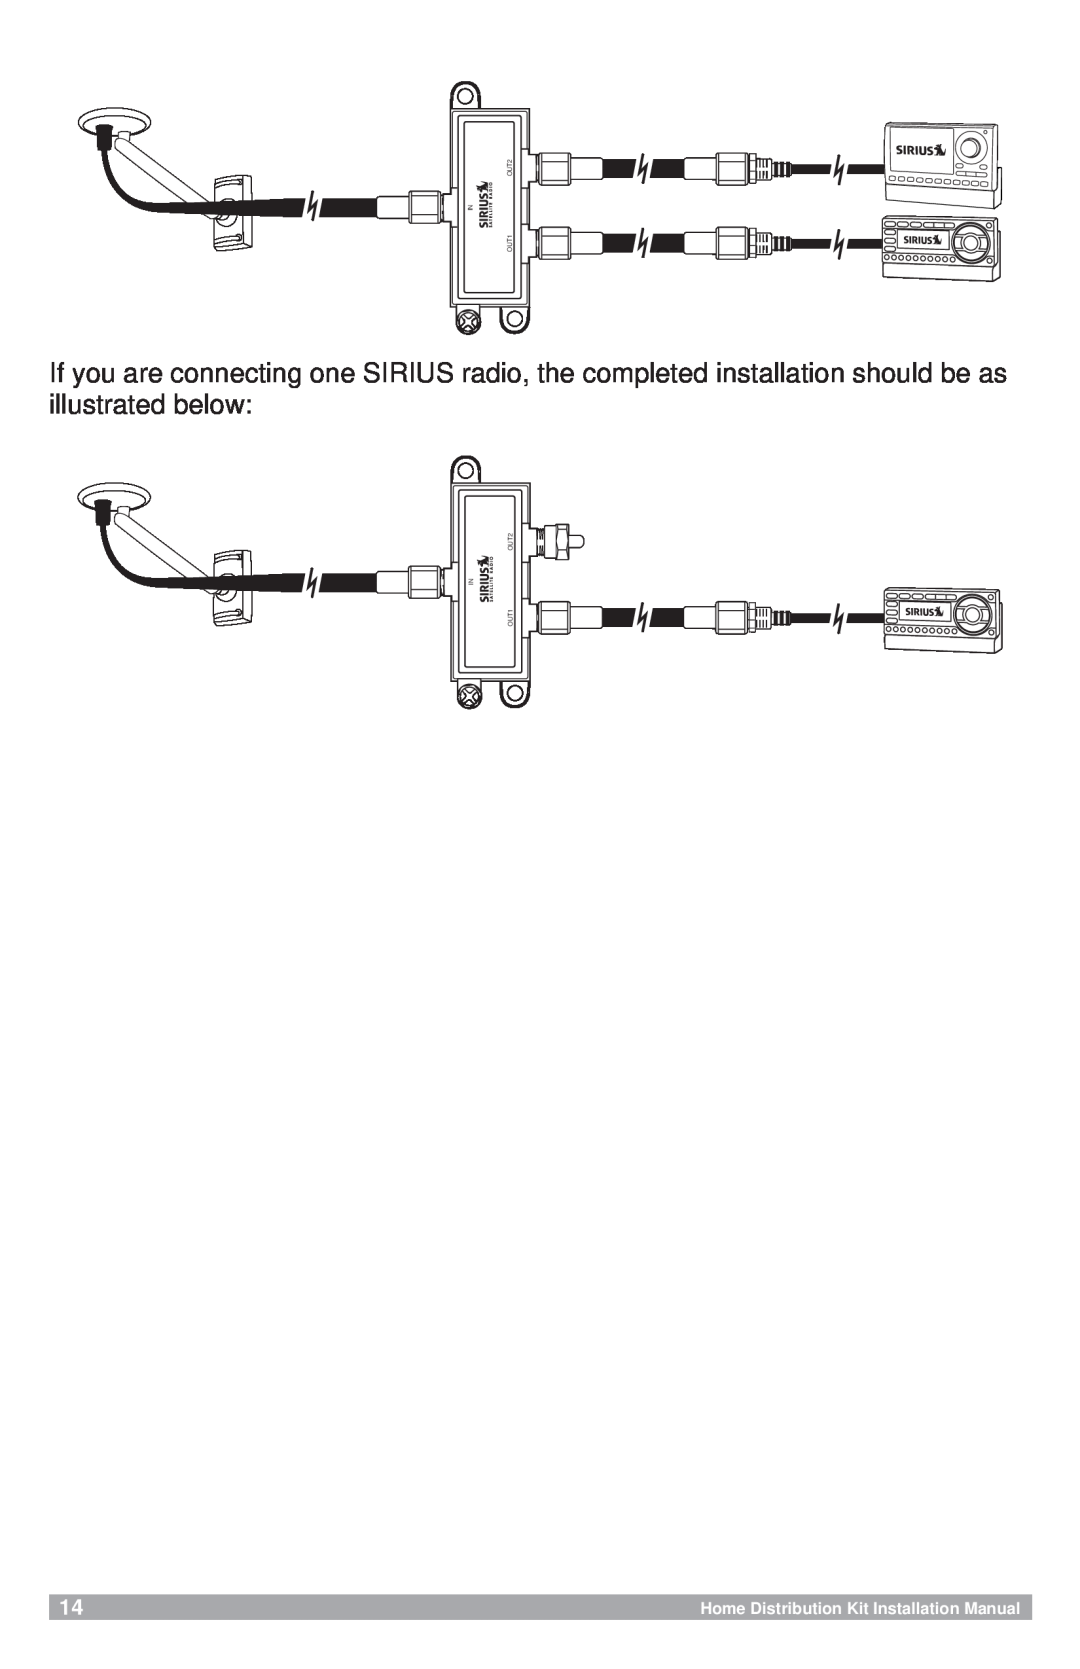 Sirius Satellite Radio SRS-2VB installation manual Home Distribution Kit Installation Manual, OUT2, OUT1 